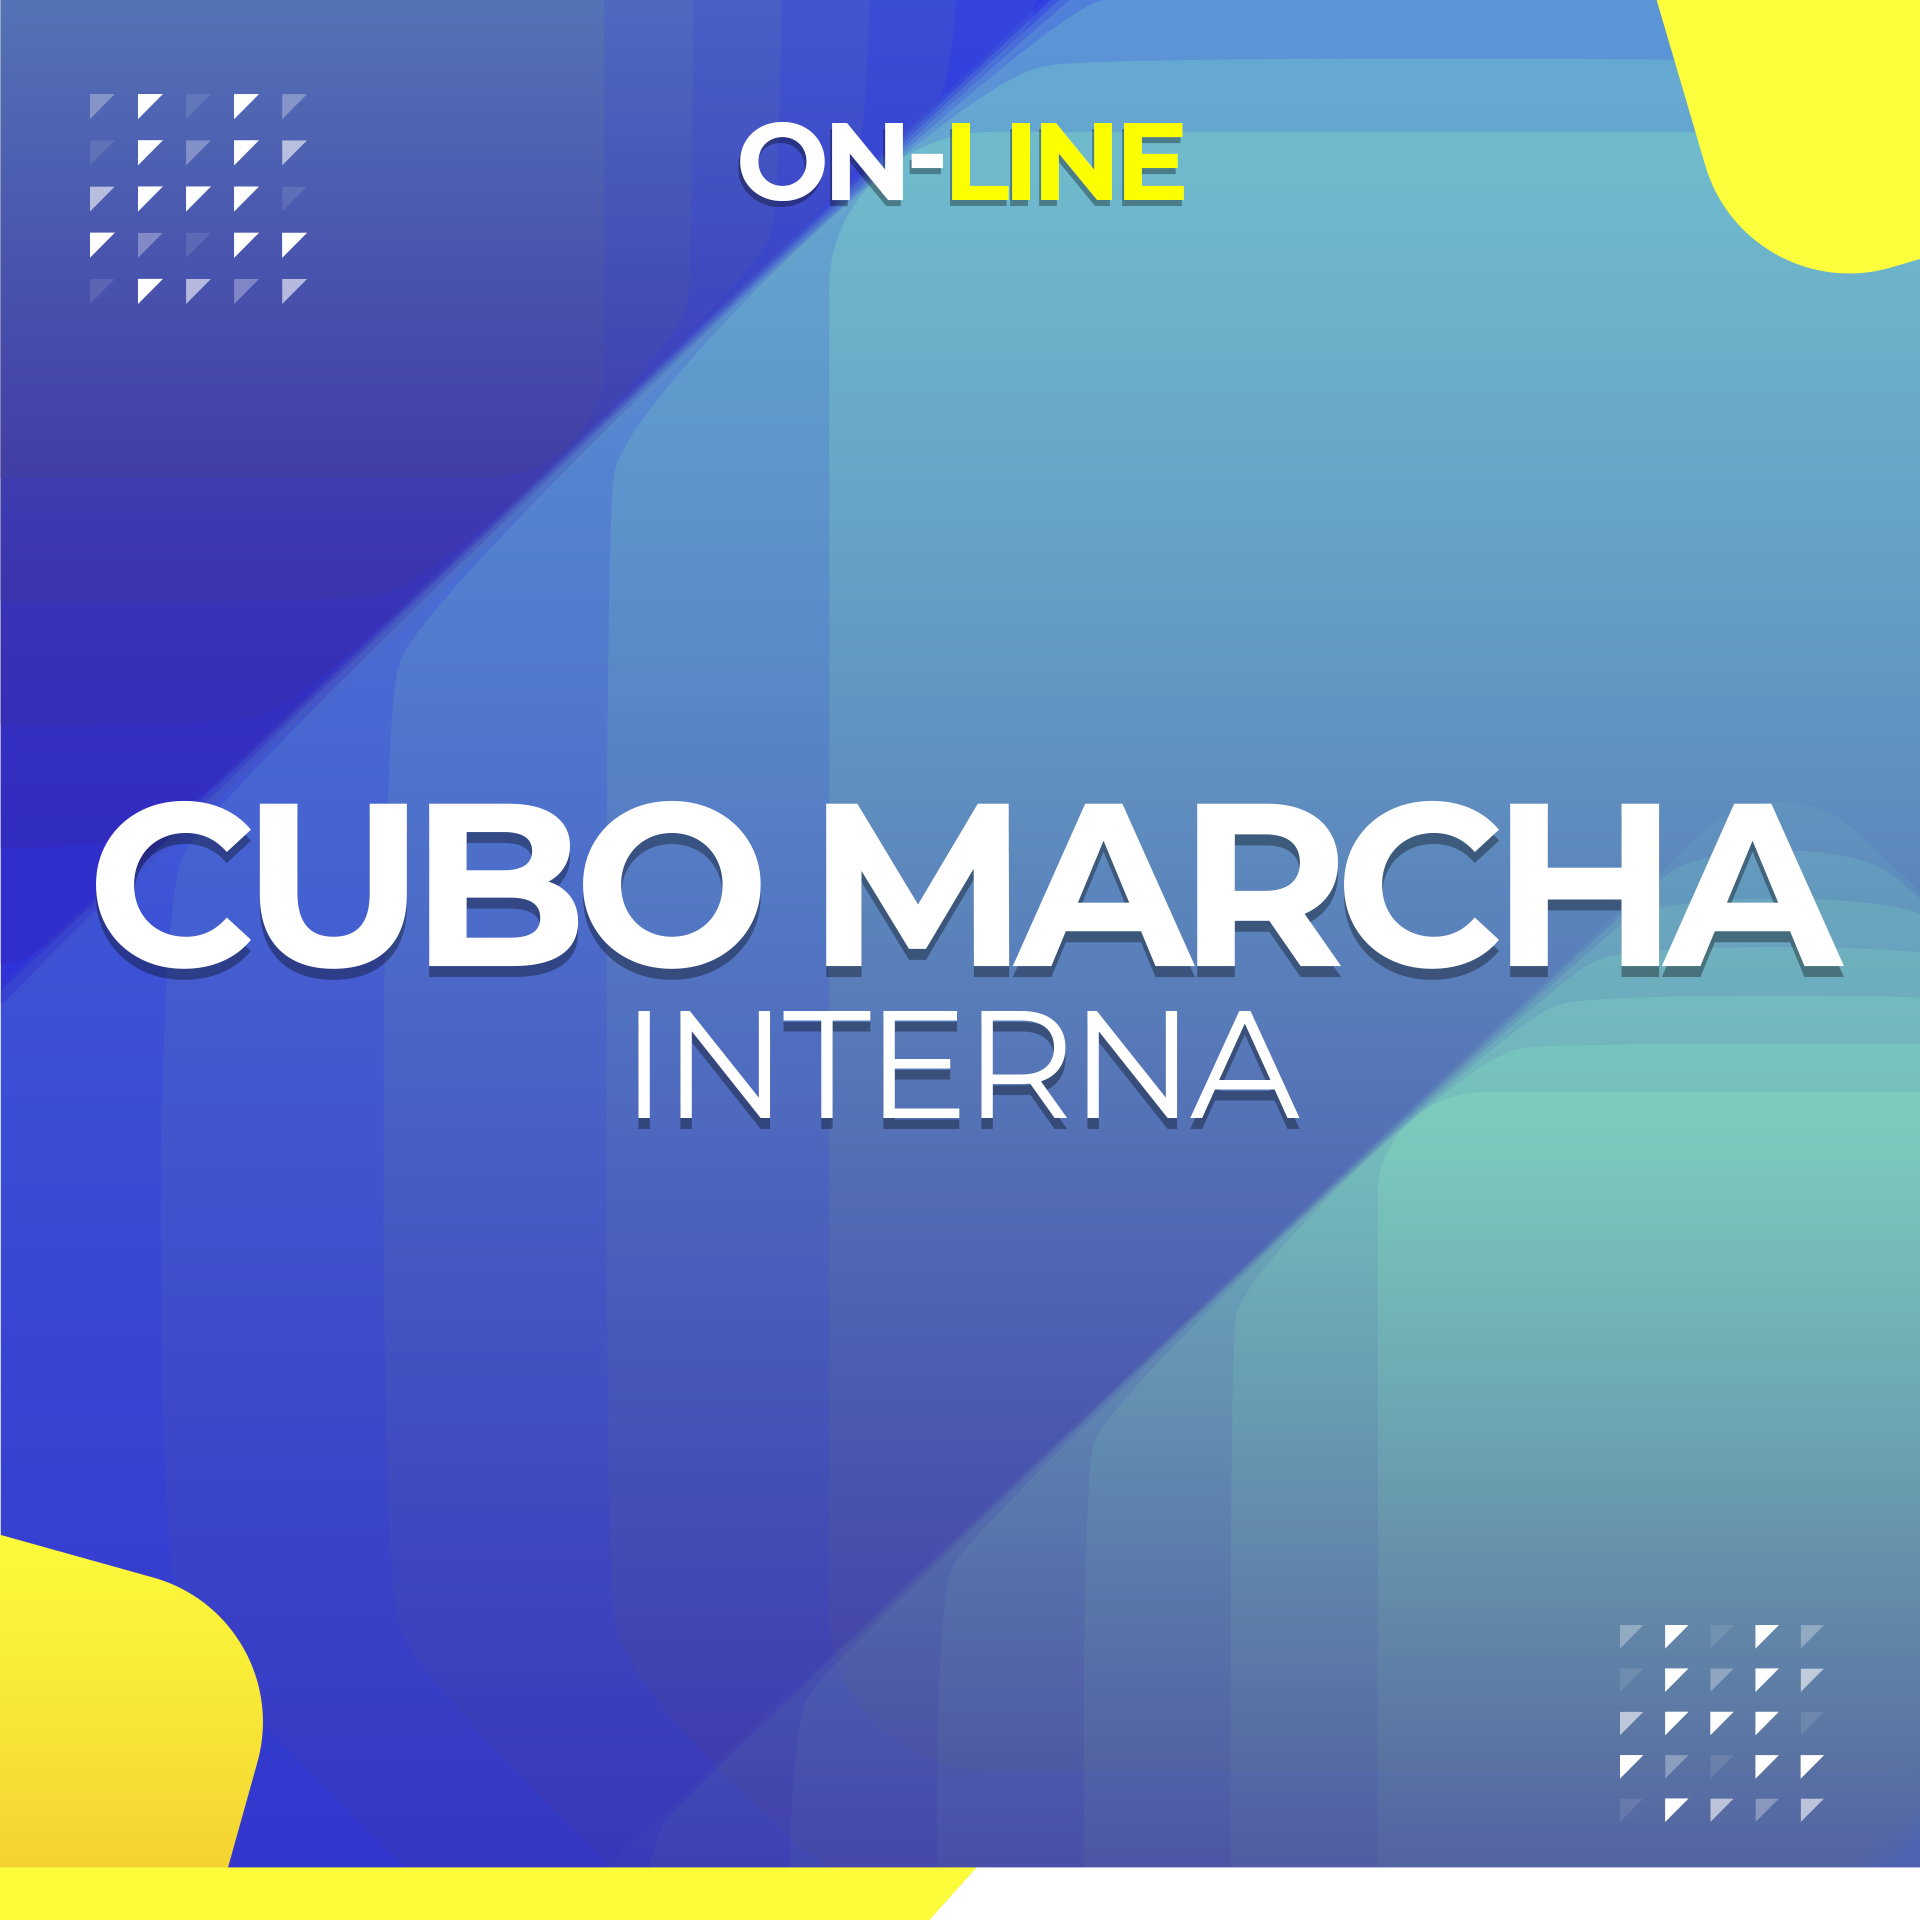 CUBO-MARCHA-INTERNA-ON-LINE